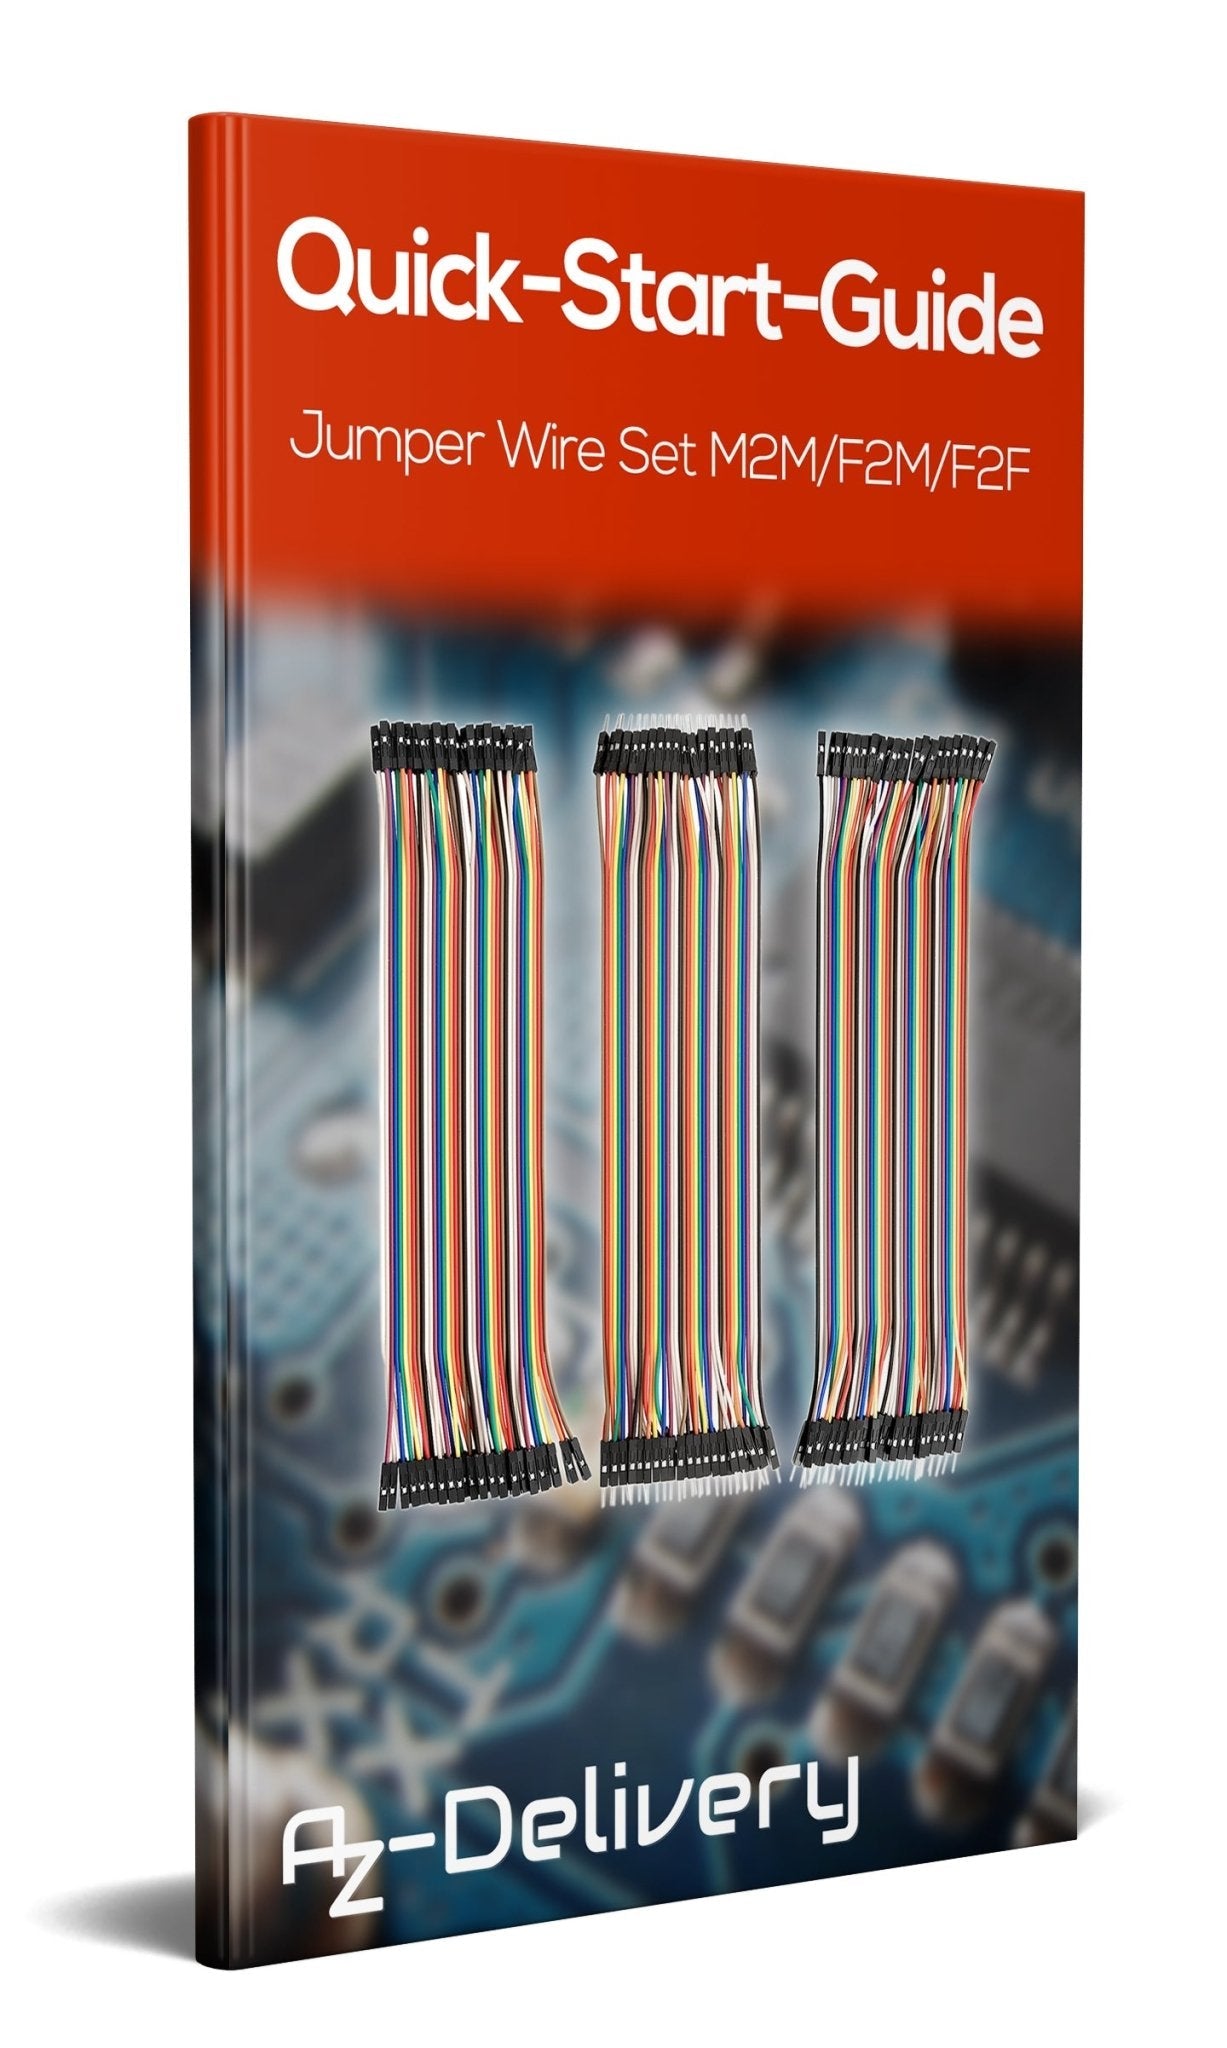 Jumper Wire Kabel 3 x 40 STK. je 20 cm M2M/ F2M / F2F Raspberry Pi Breadboard - AZ-Delivery